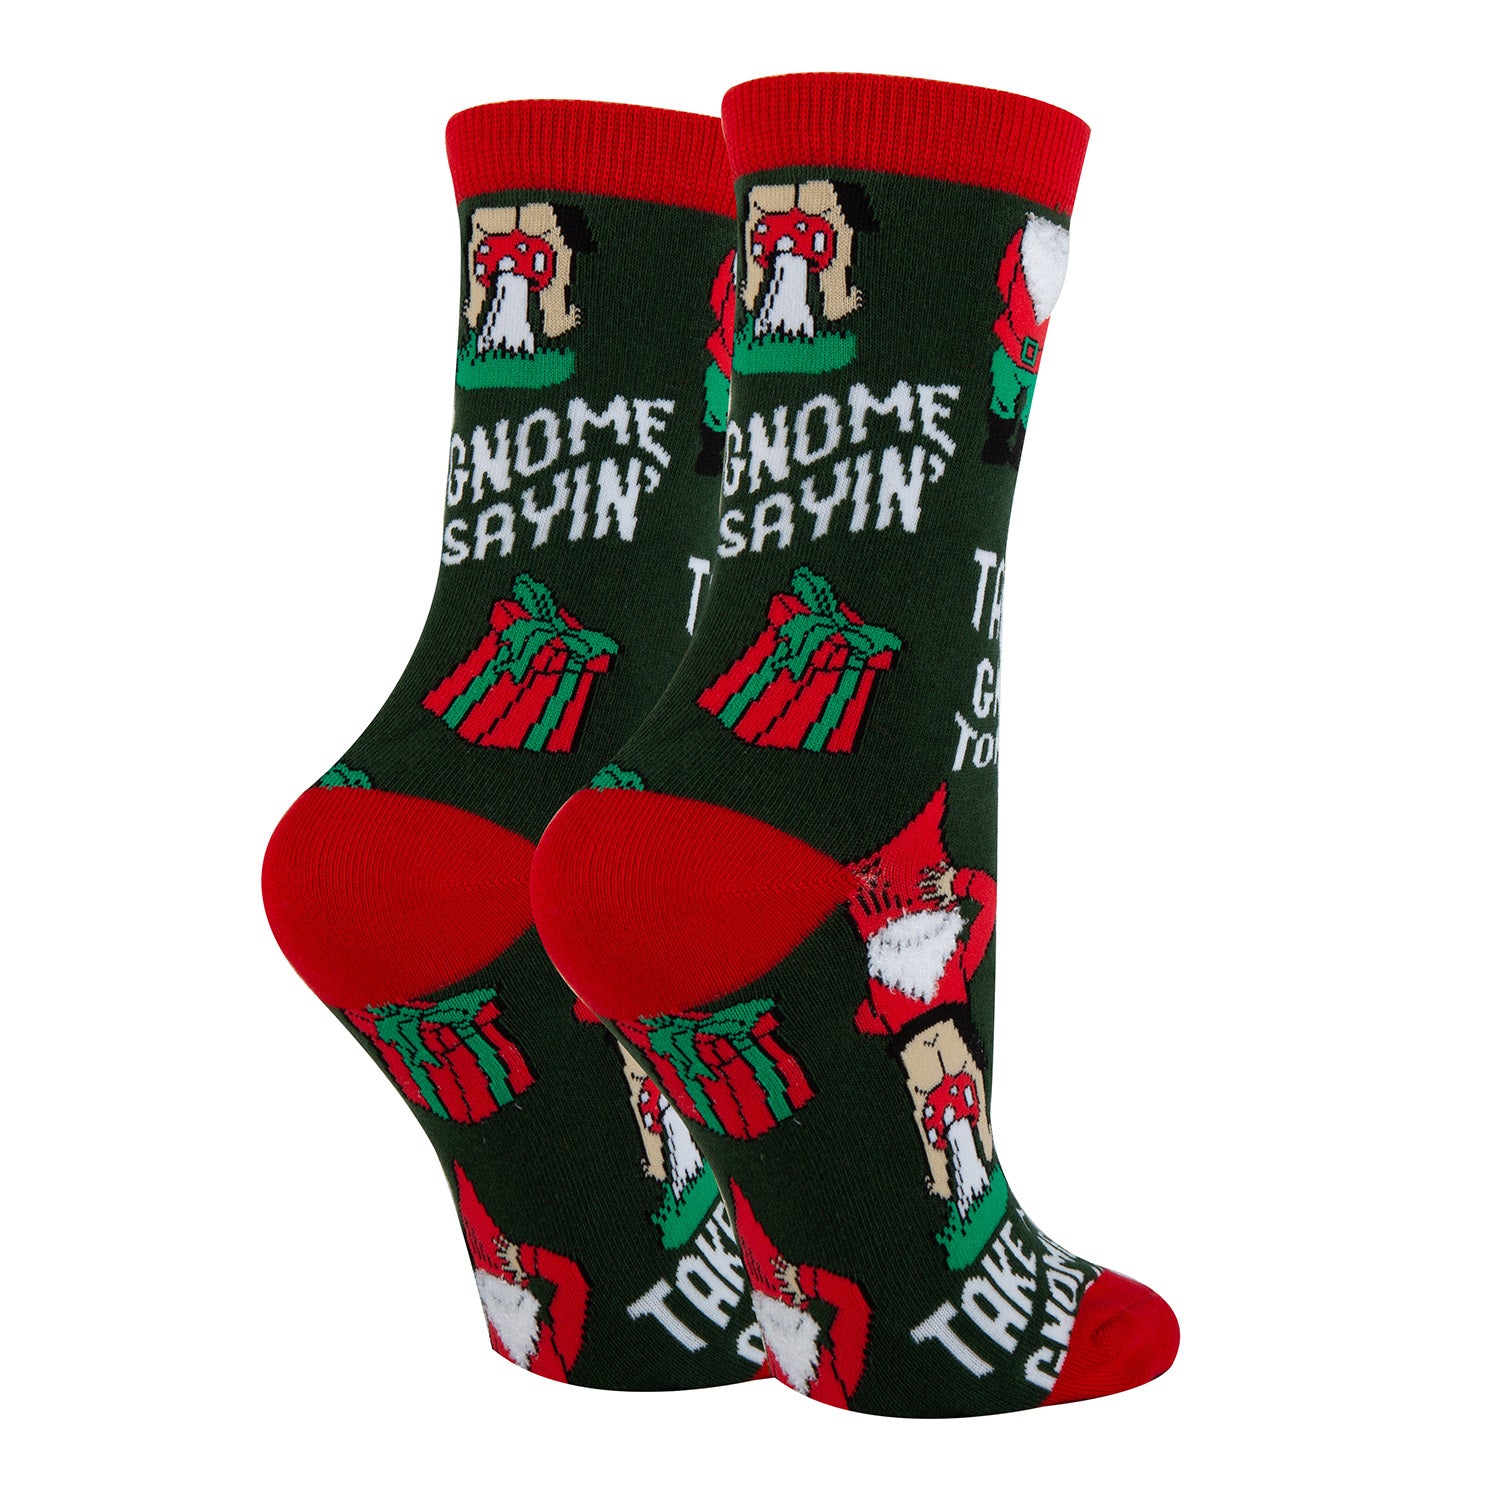 Gnome Sayin Socks - 0